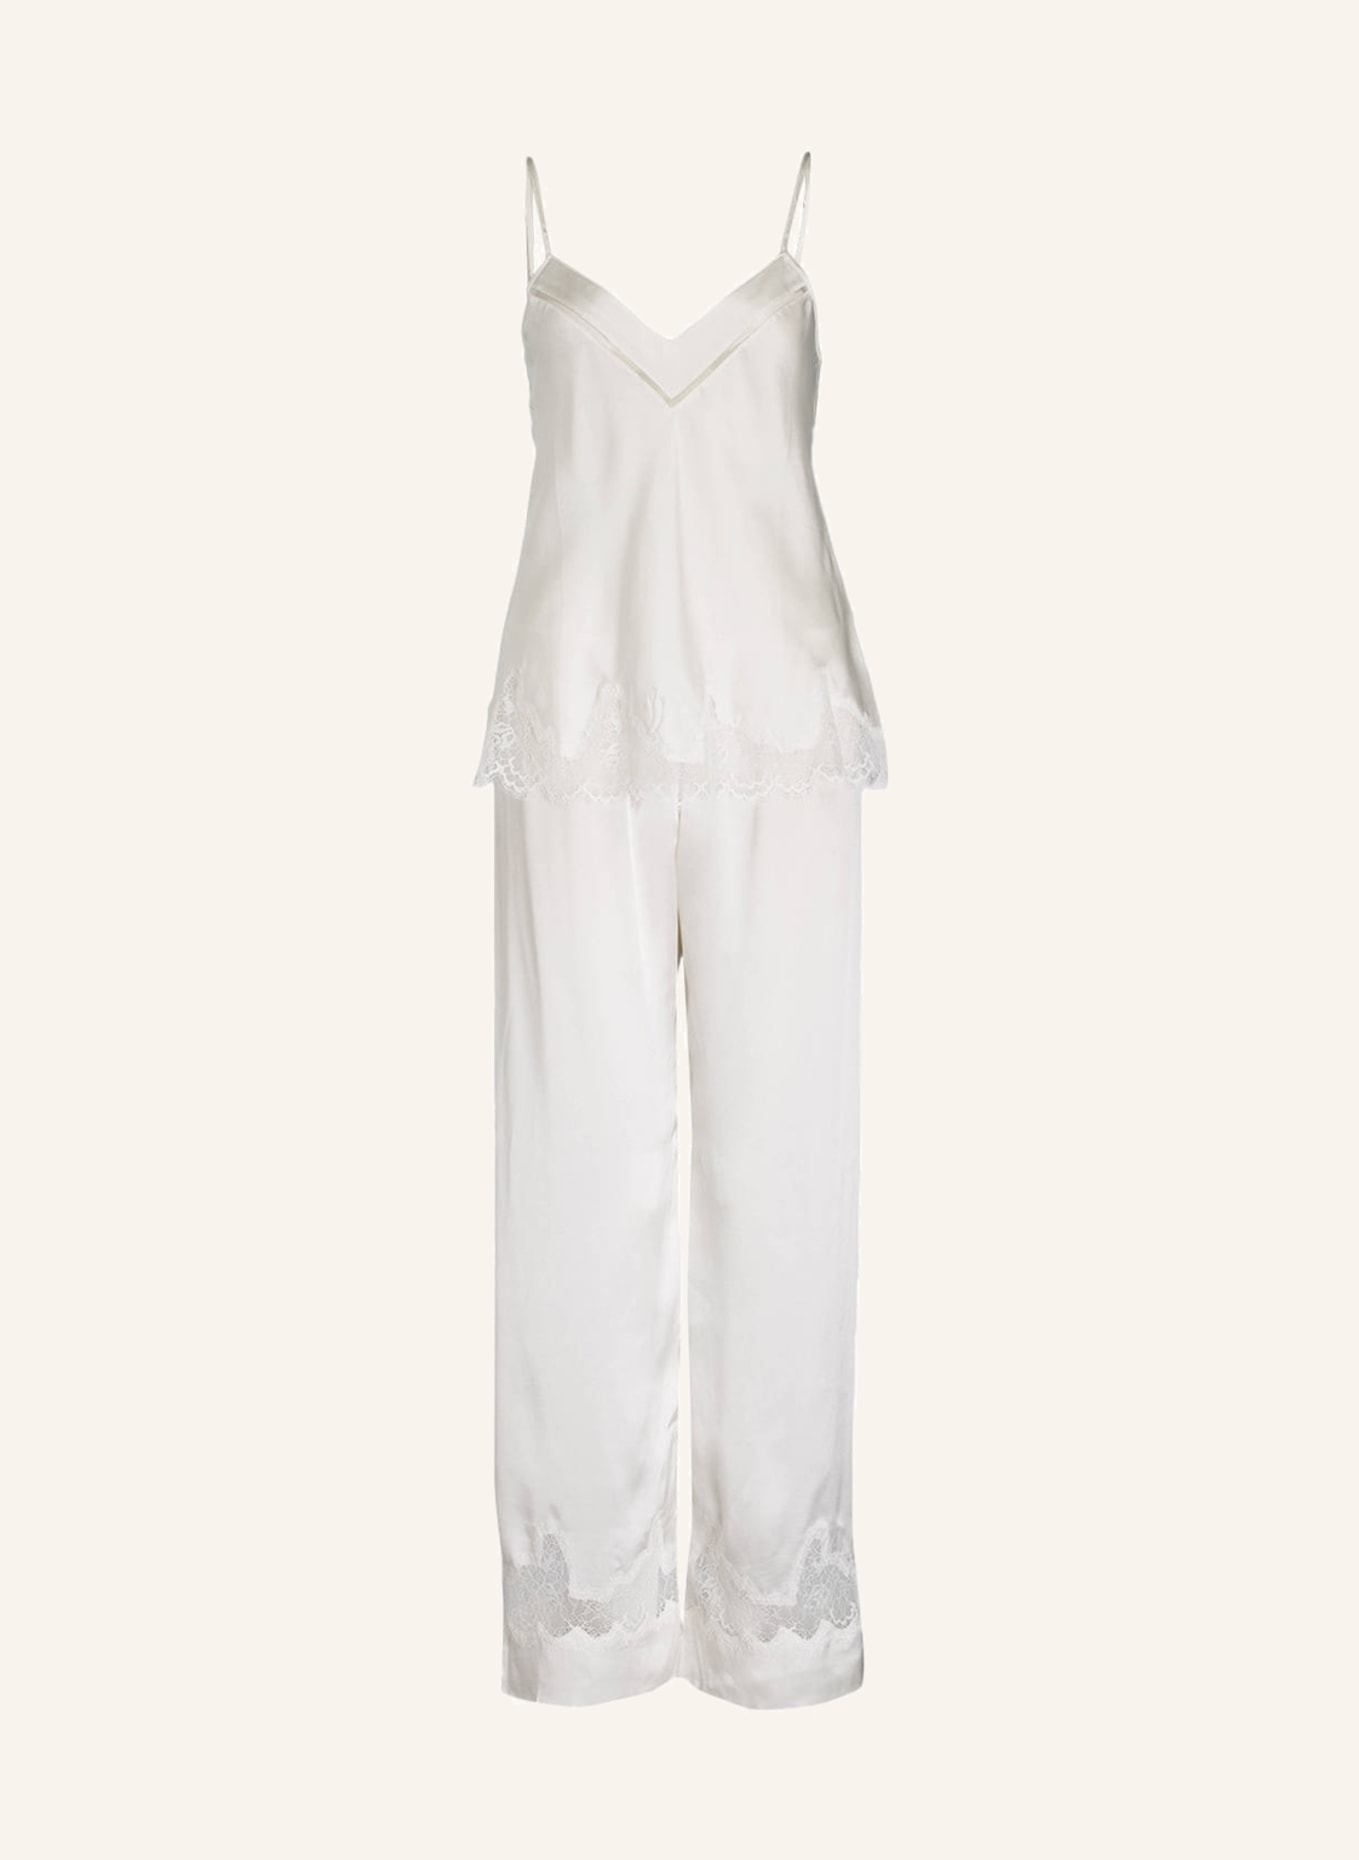 SIMONE PÉRÈLE Pajama top NOCTURNE made of silk, Color: IVORY (Image 4)